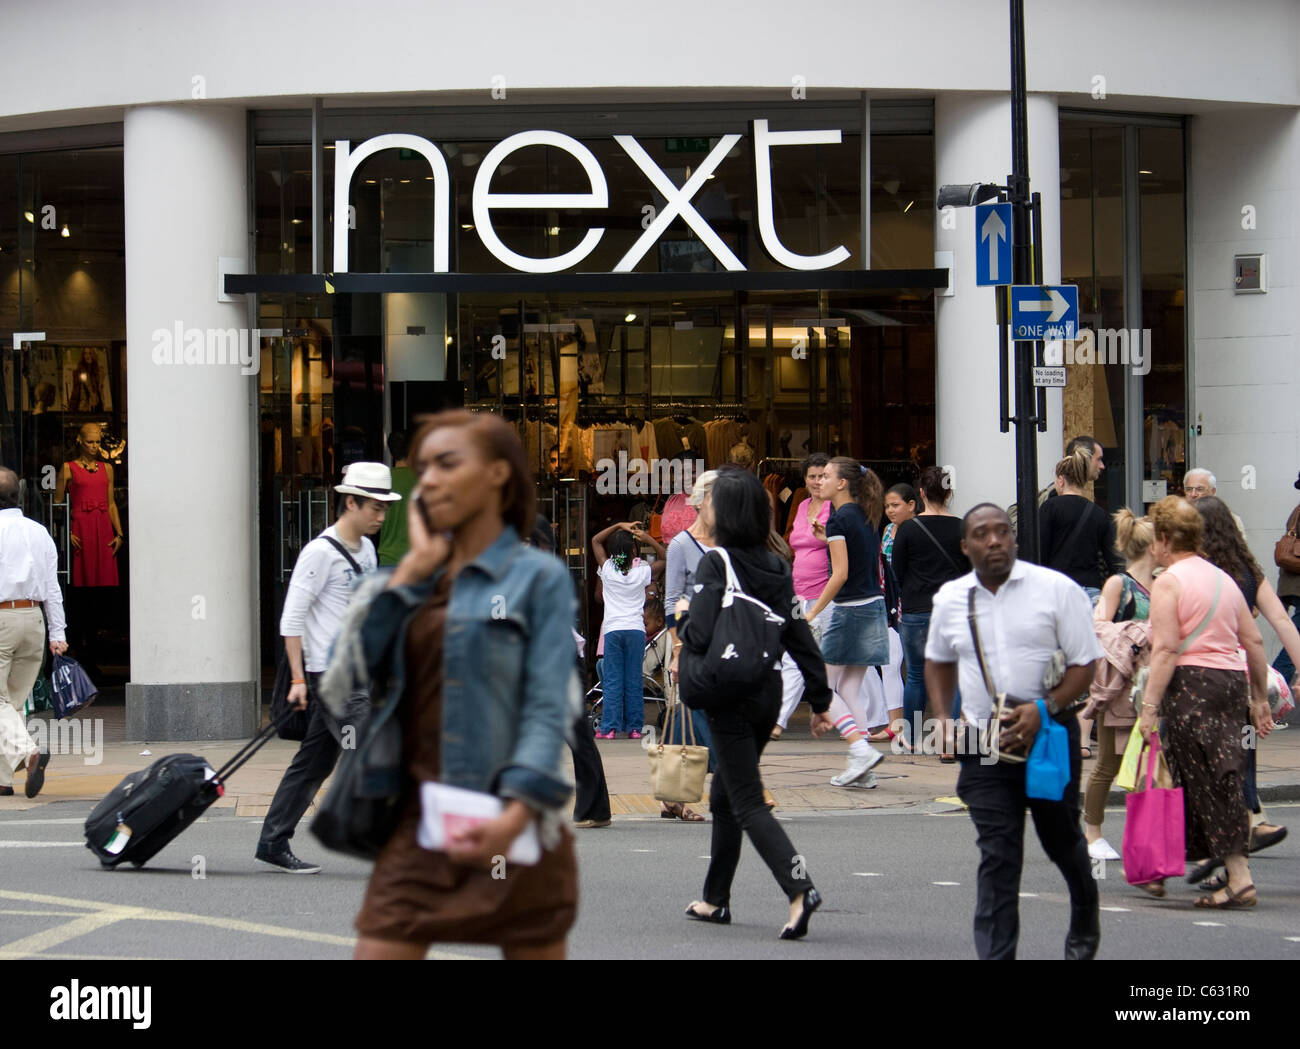 next clothing shop store Oxford street London Stock Photo